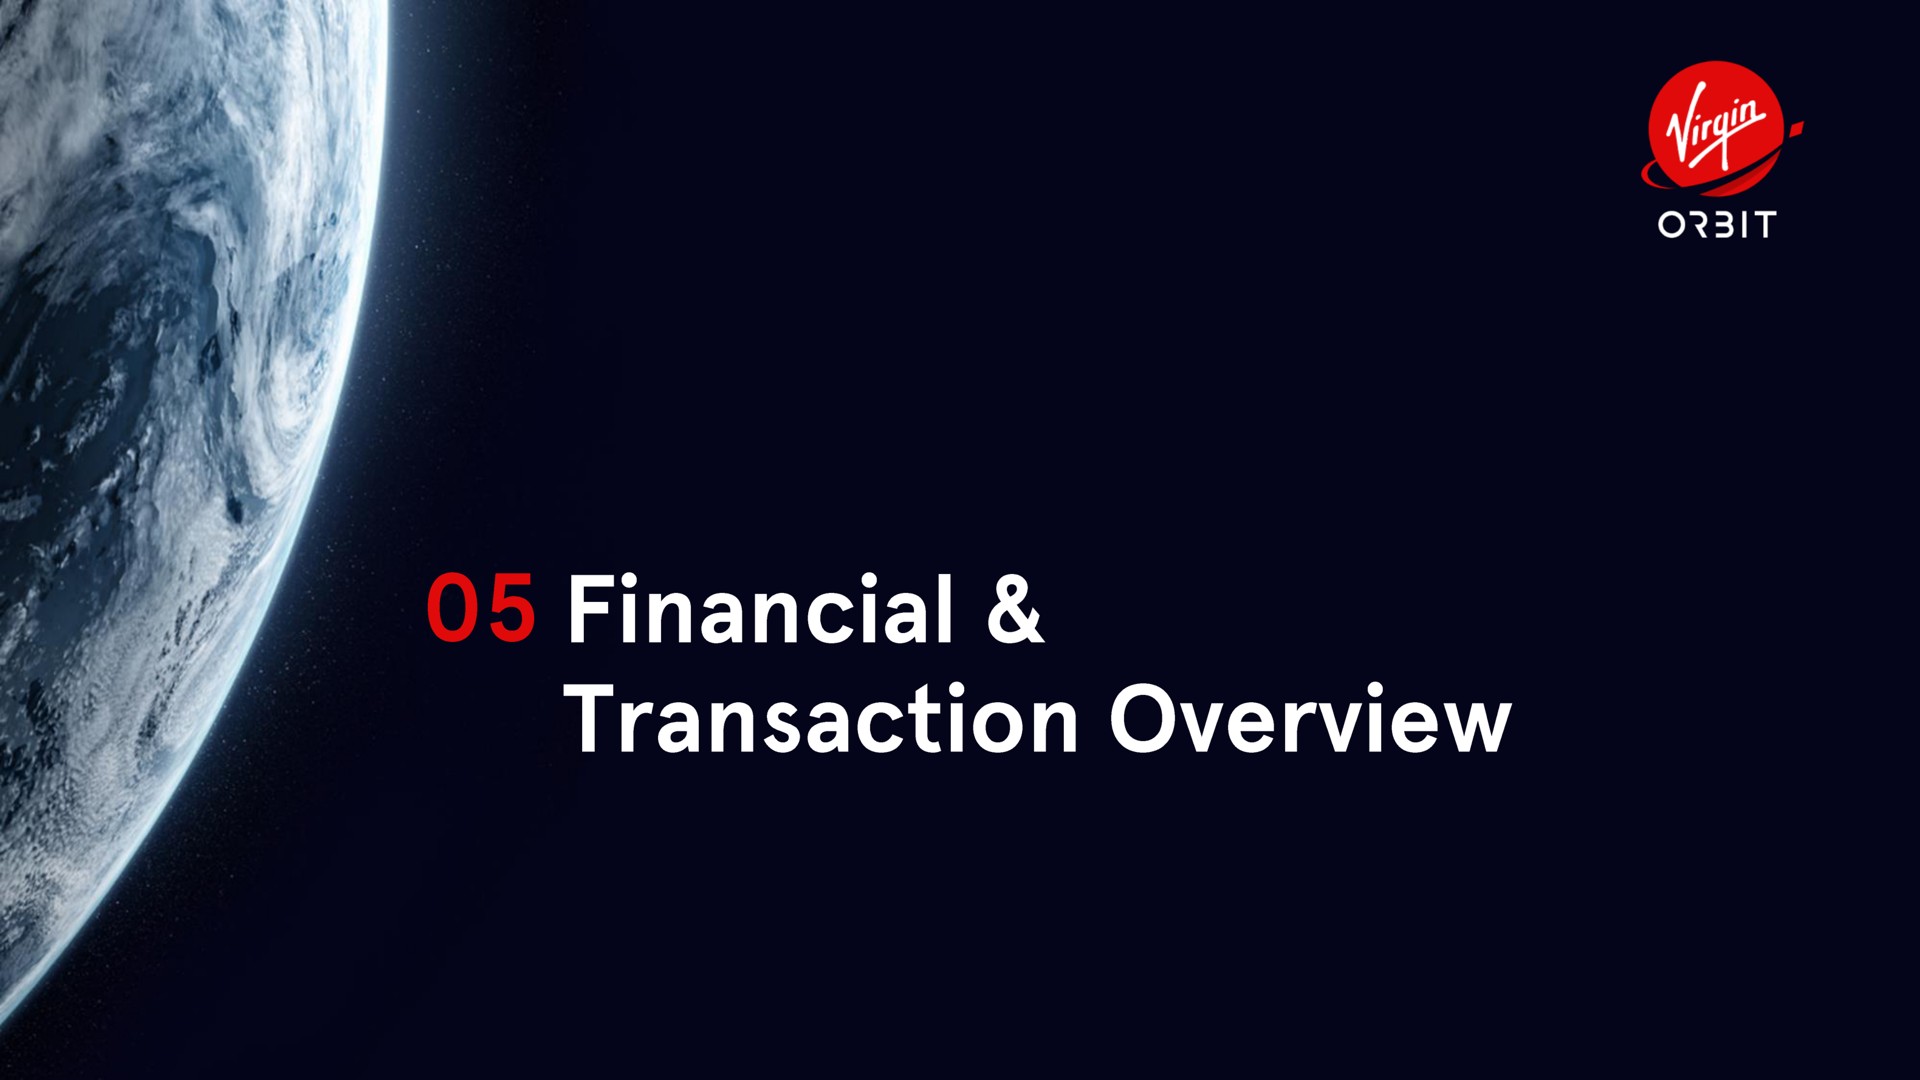 financial transaction overview | Virgin Orbit